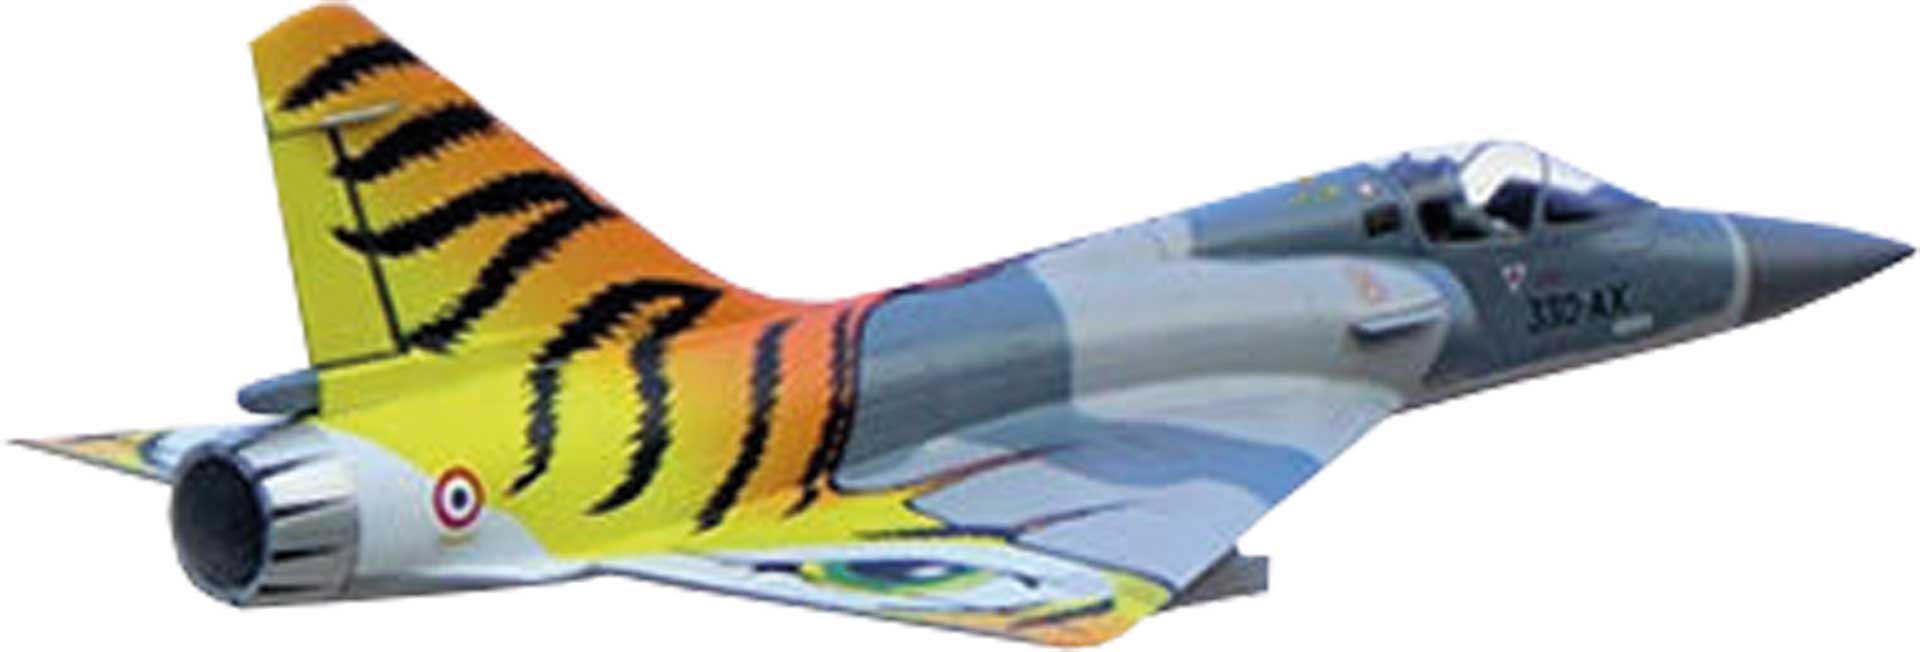 FREEWING Mirage 2000C V2 “Tiger Meet” High Performance 80mm EDF Jet - PNP